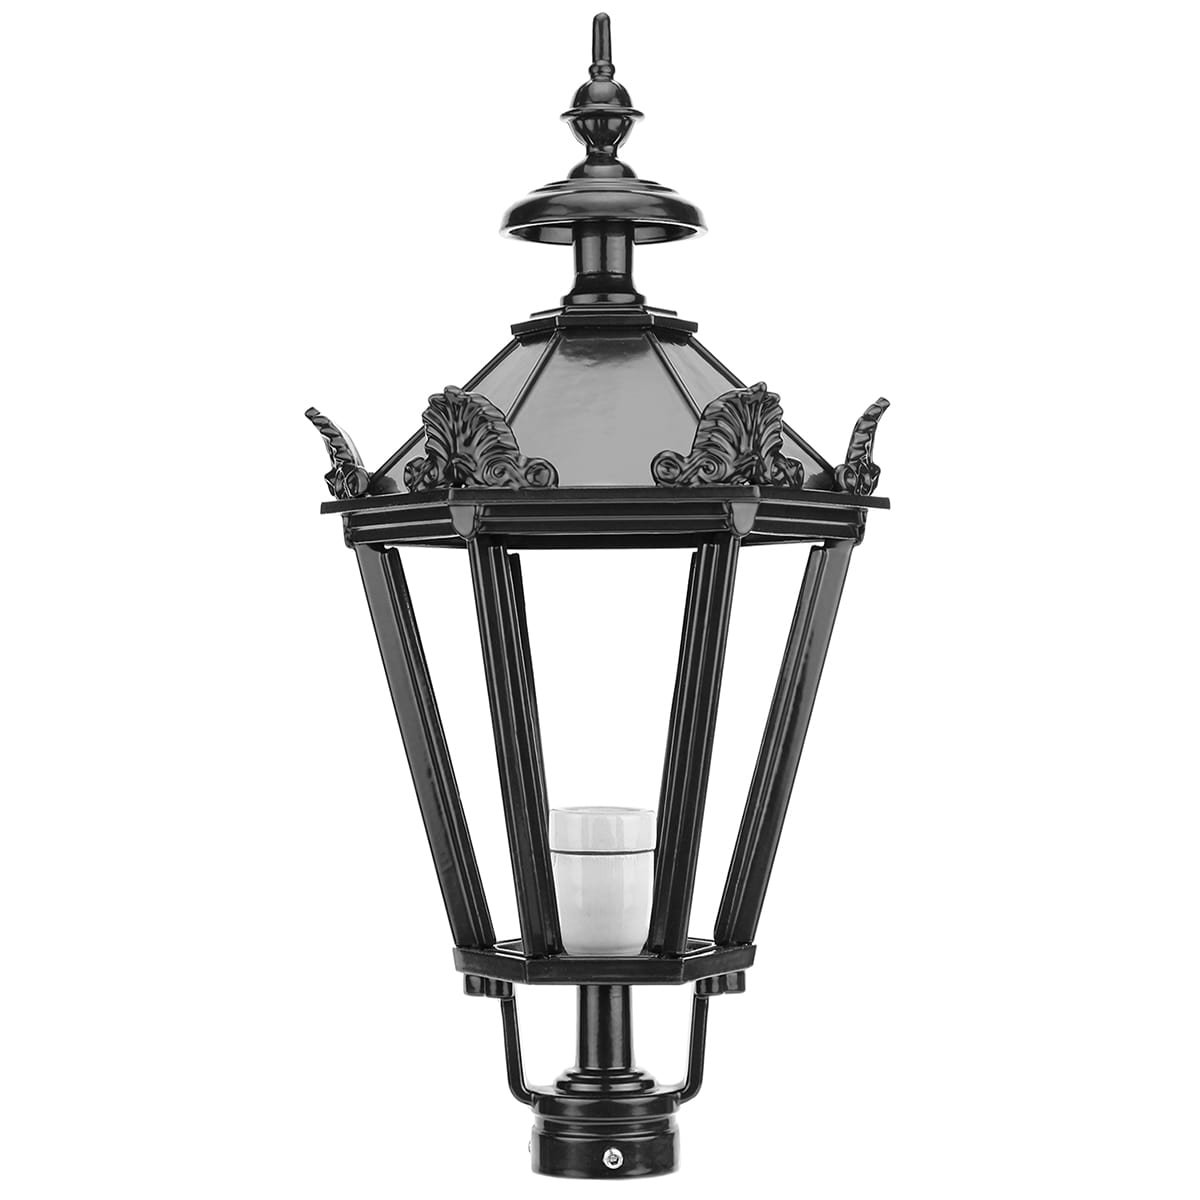 Loose lantern shade K11+ with crowns - 75 cm